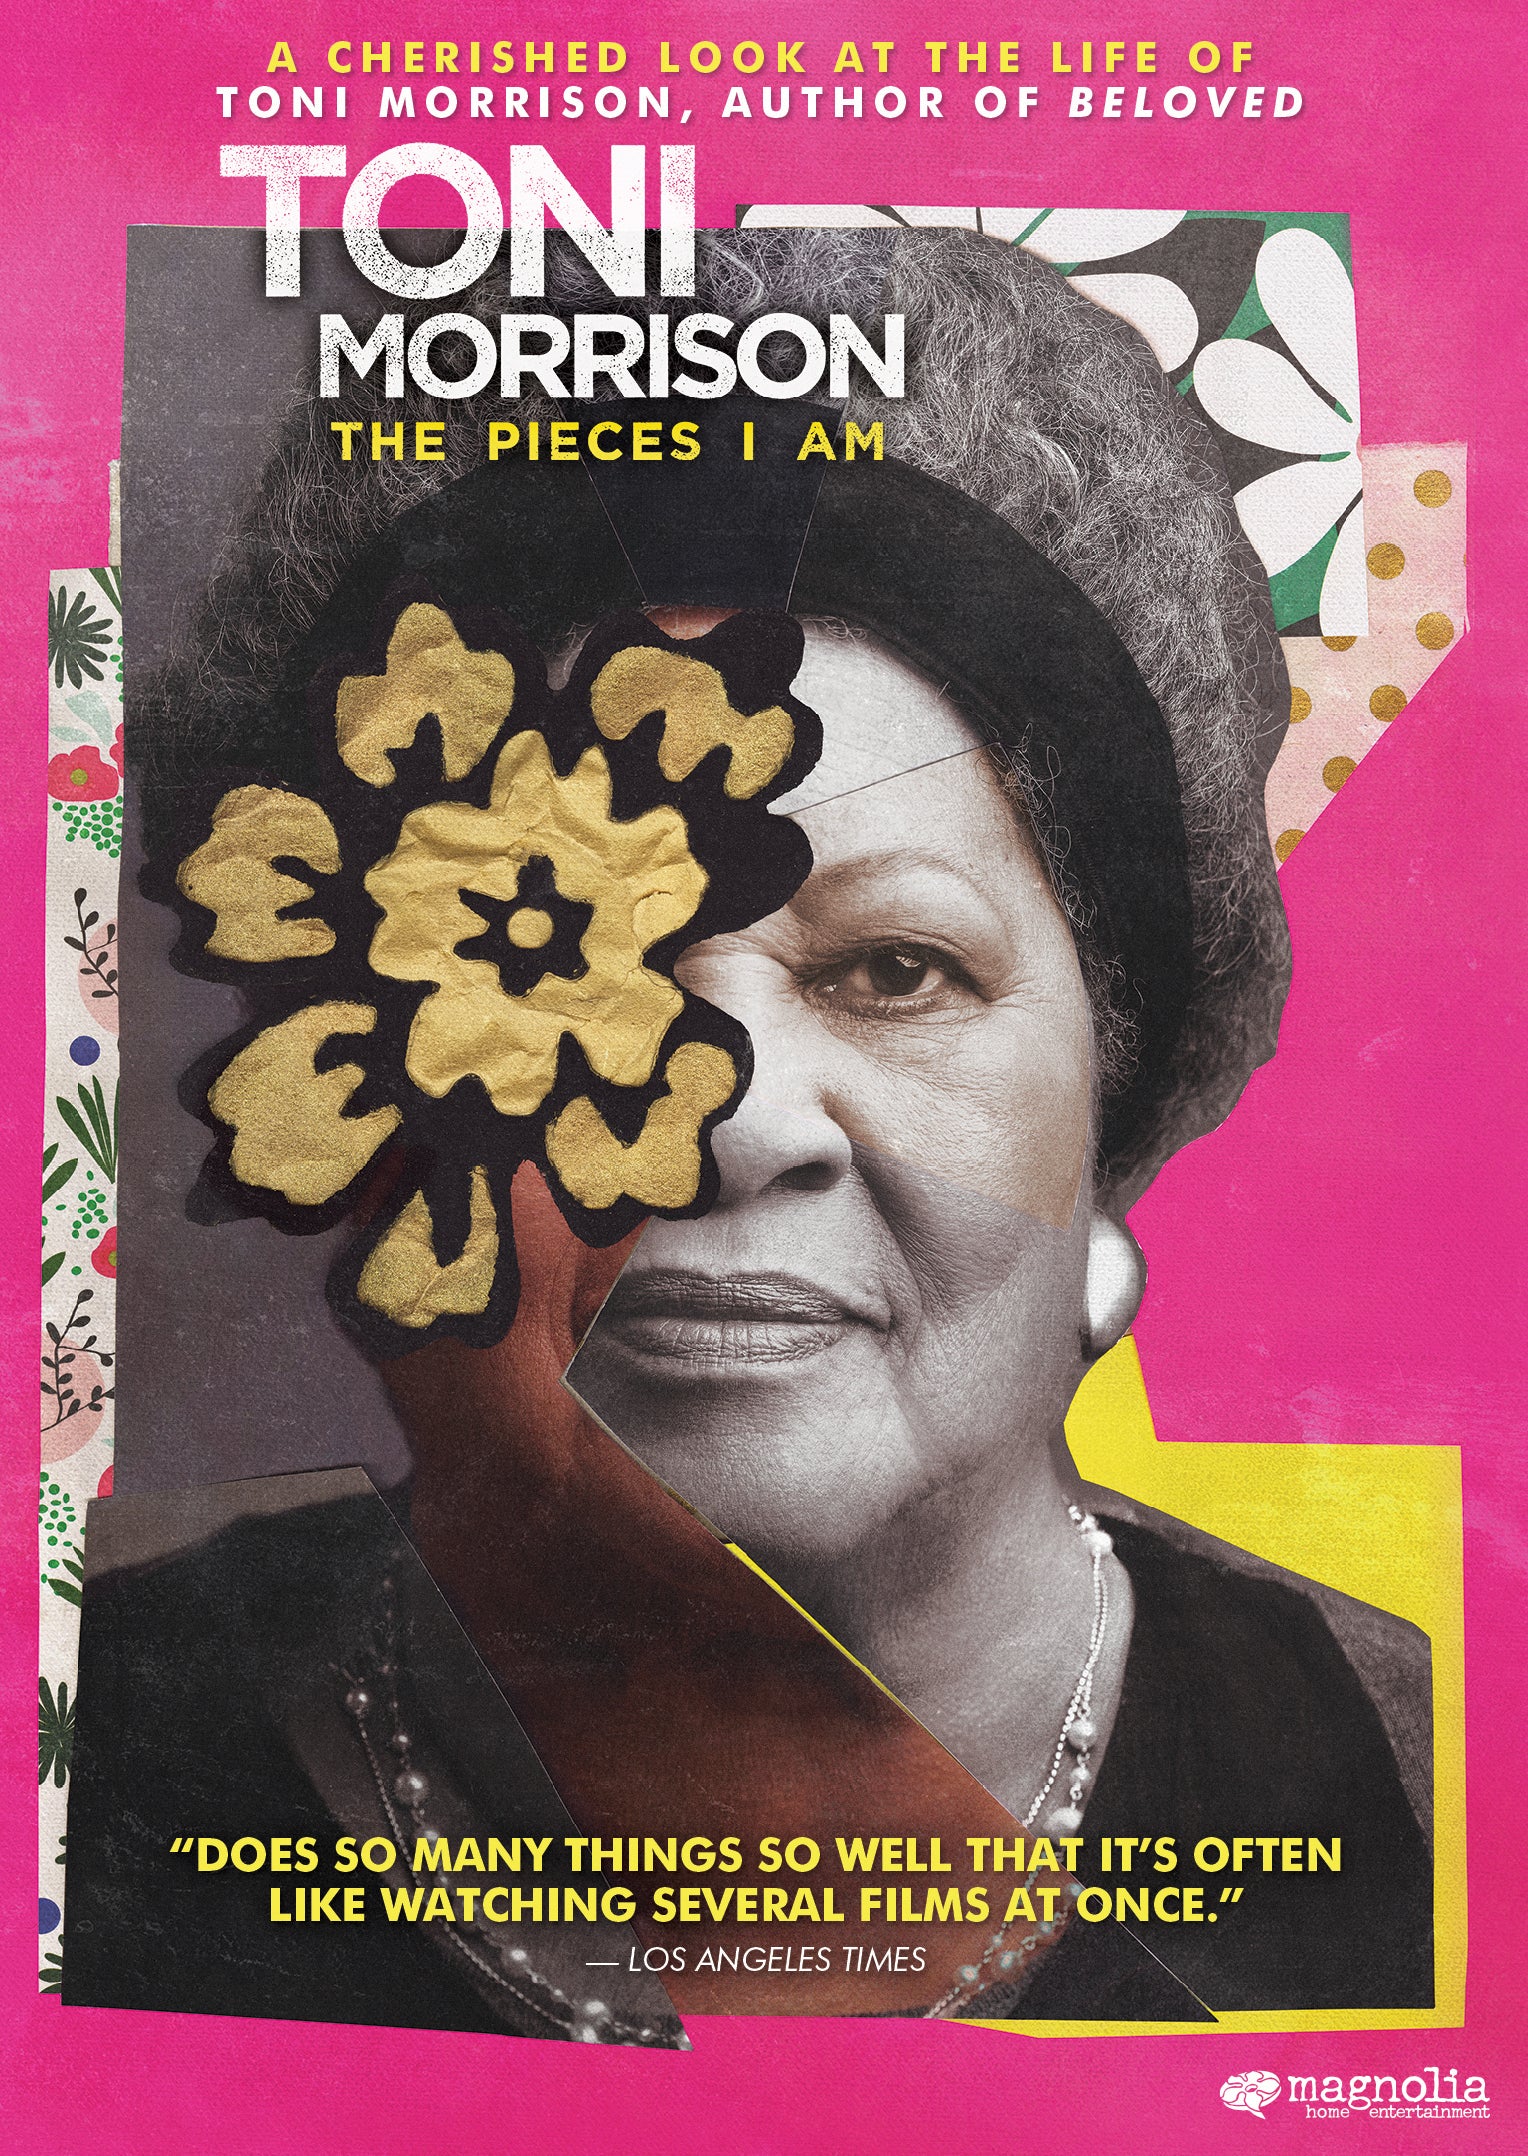 Toni Morrison: The Pieces I Am cover art